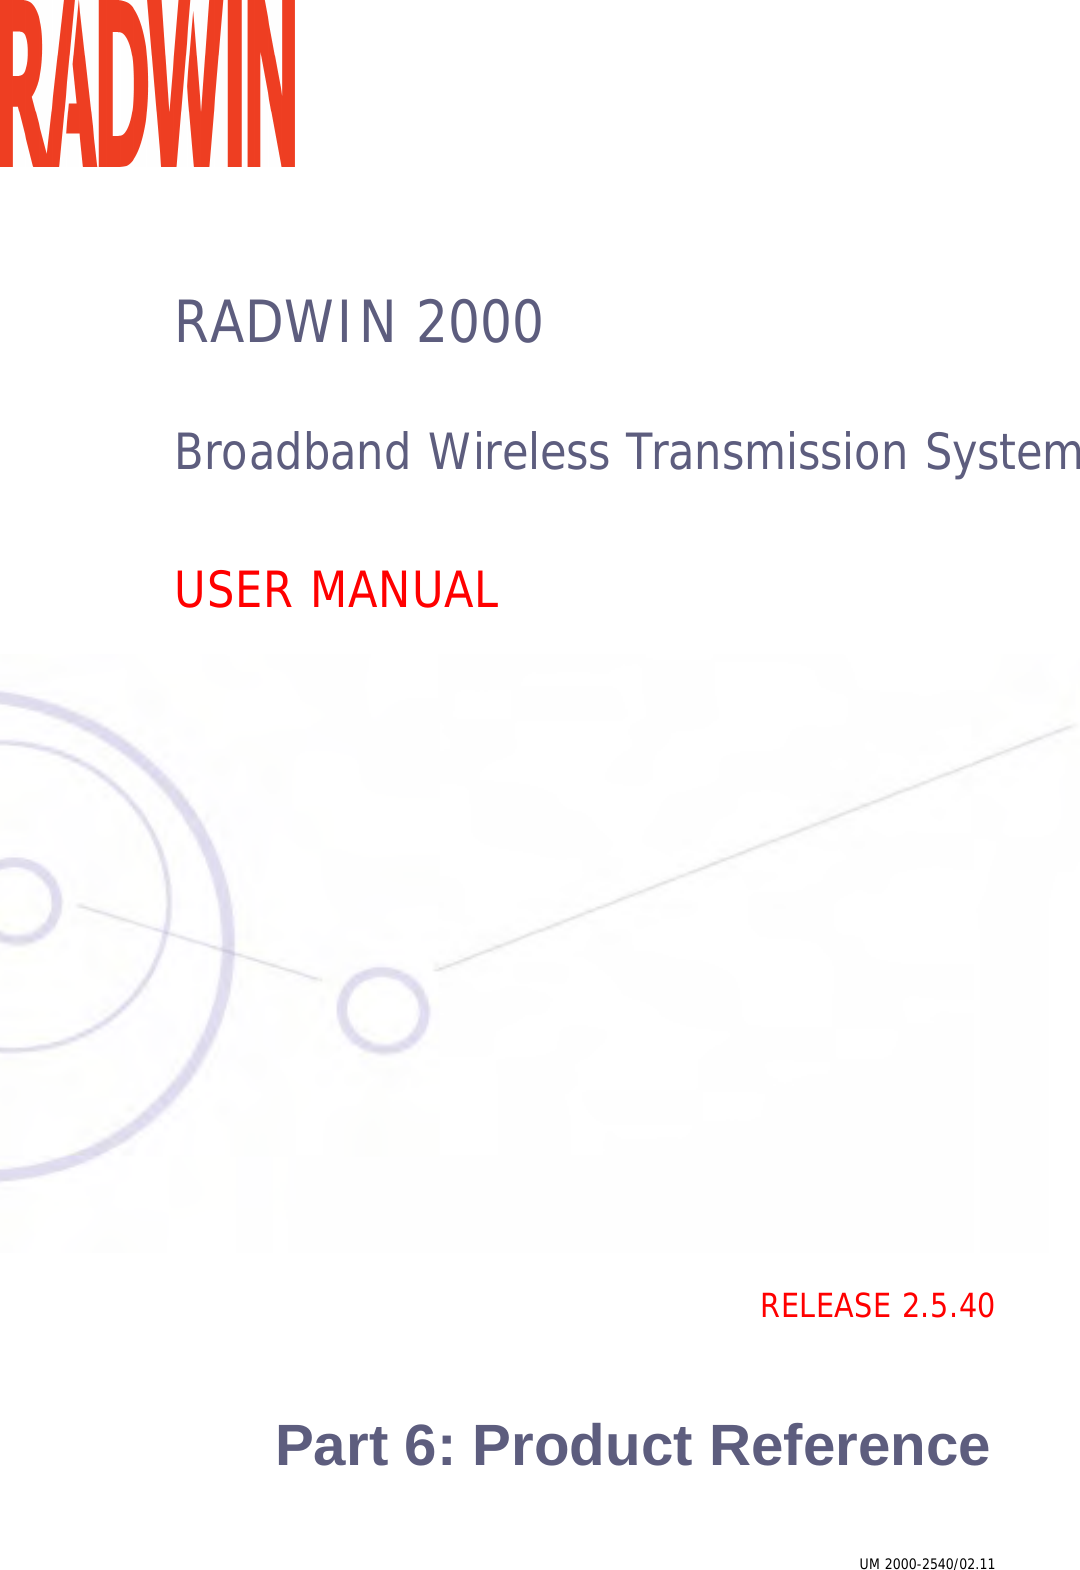 RADWIN 2000Broadband Wireless Transmission SystemUSER MANUALRELEASE 2.5.40Part 6: Product ReferenceUM 2000-2540/02.11